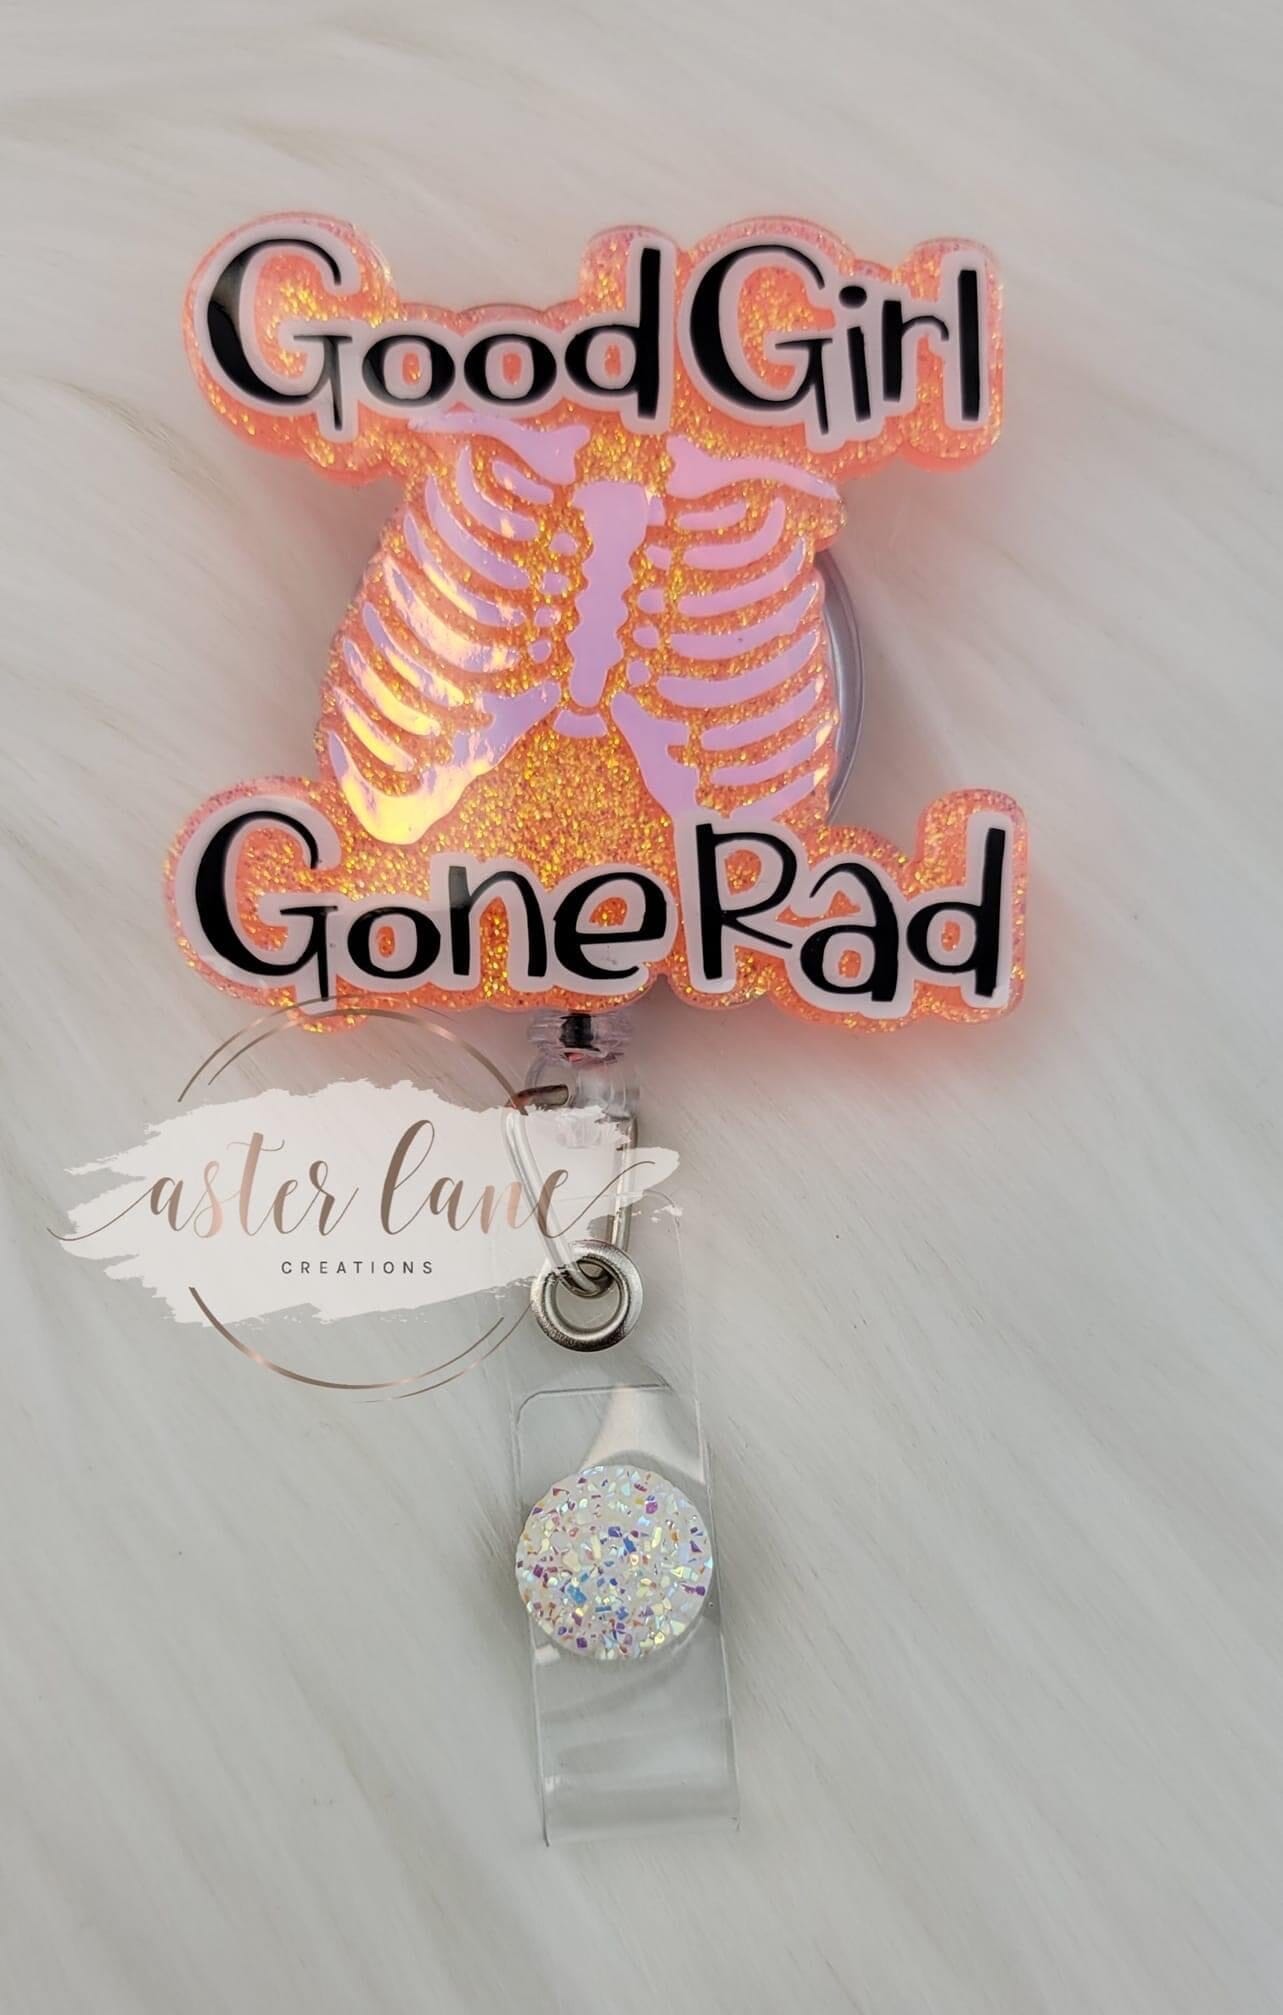 Good Girl Gone Rad - Acrylic Shape #190